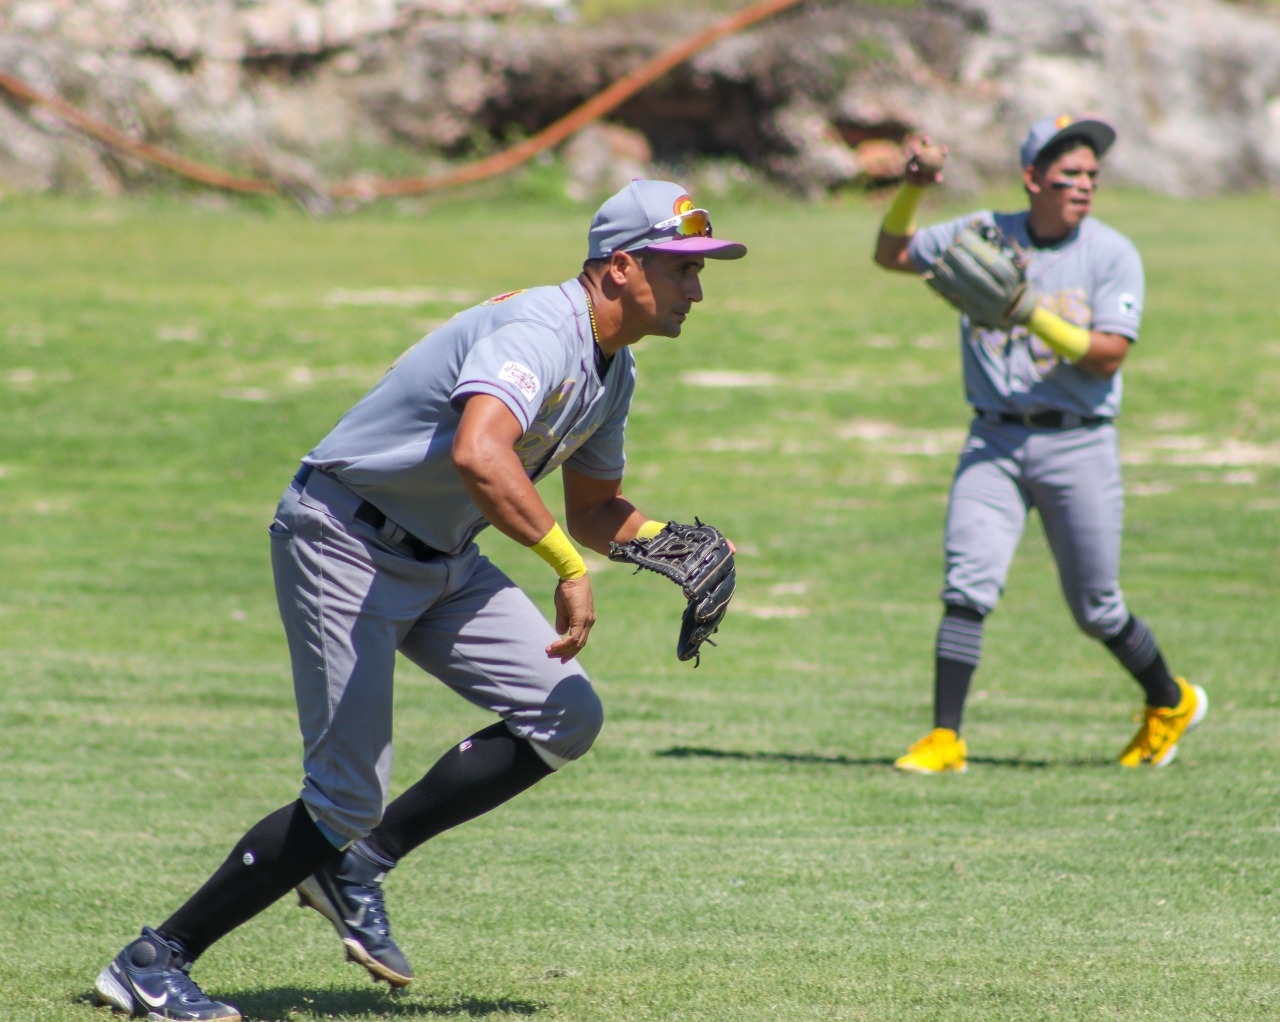 Comercial Pérez acumula siete victorias en la Liga Estatal Yucateca de Béisbol